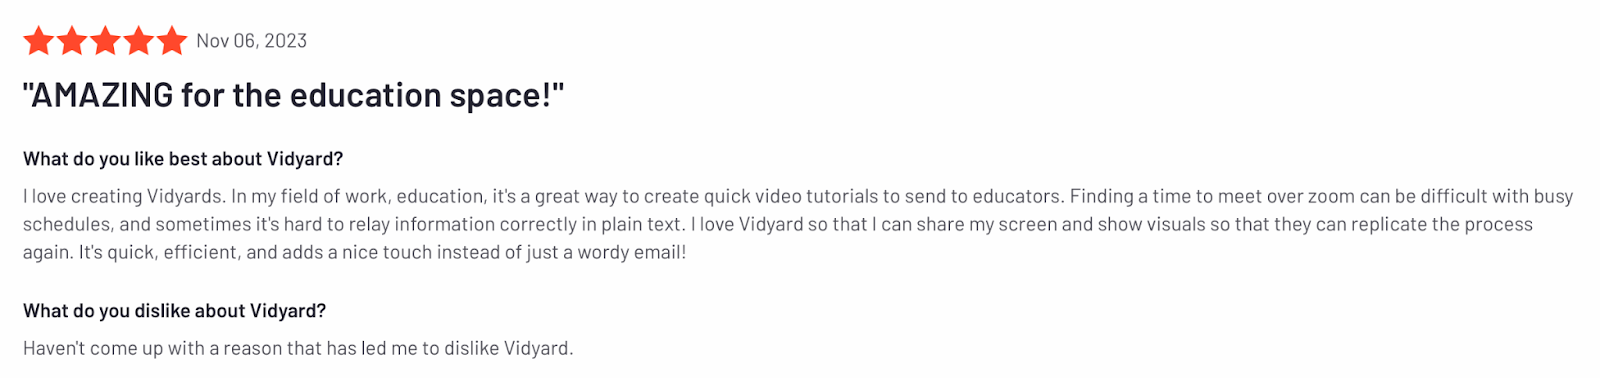 Vidyard Review 1